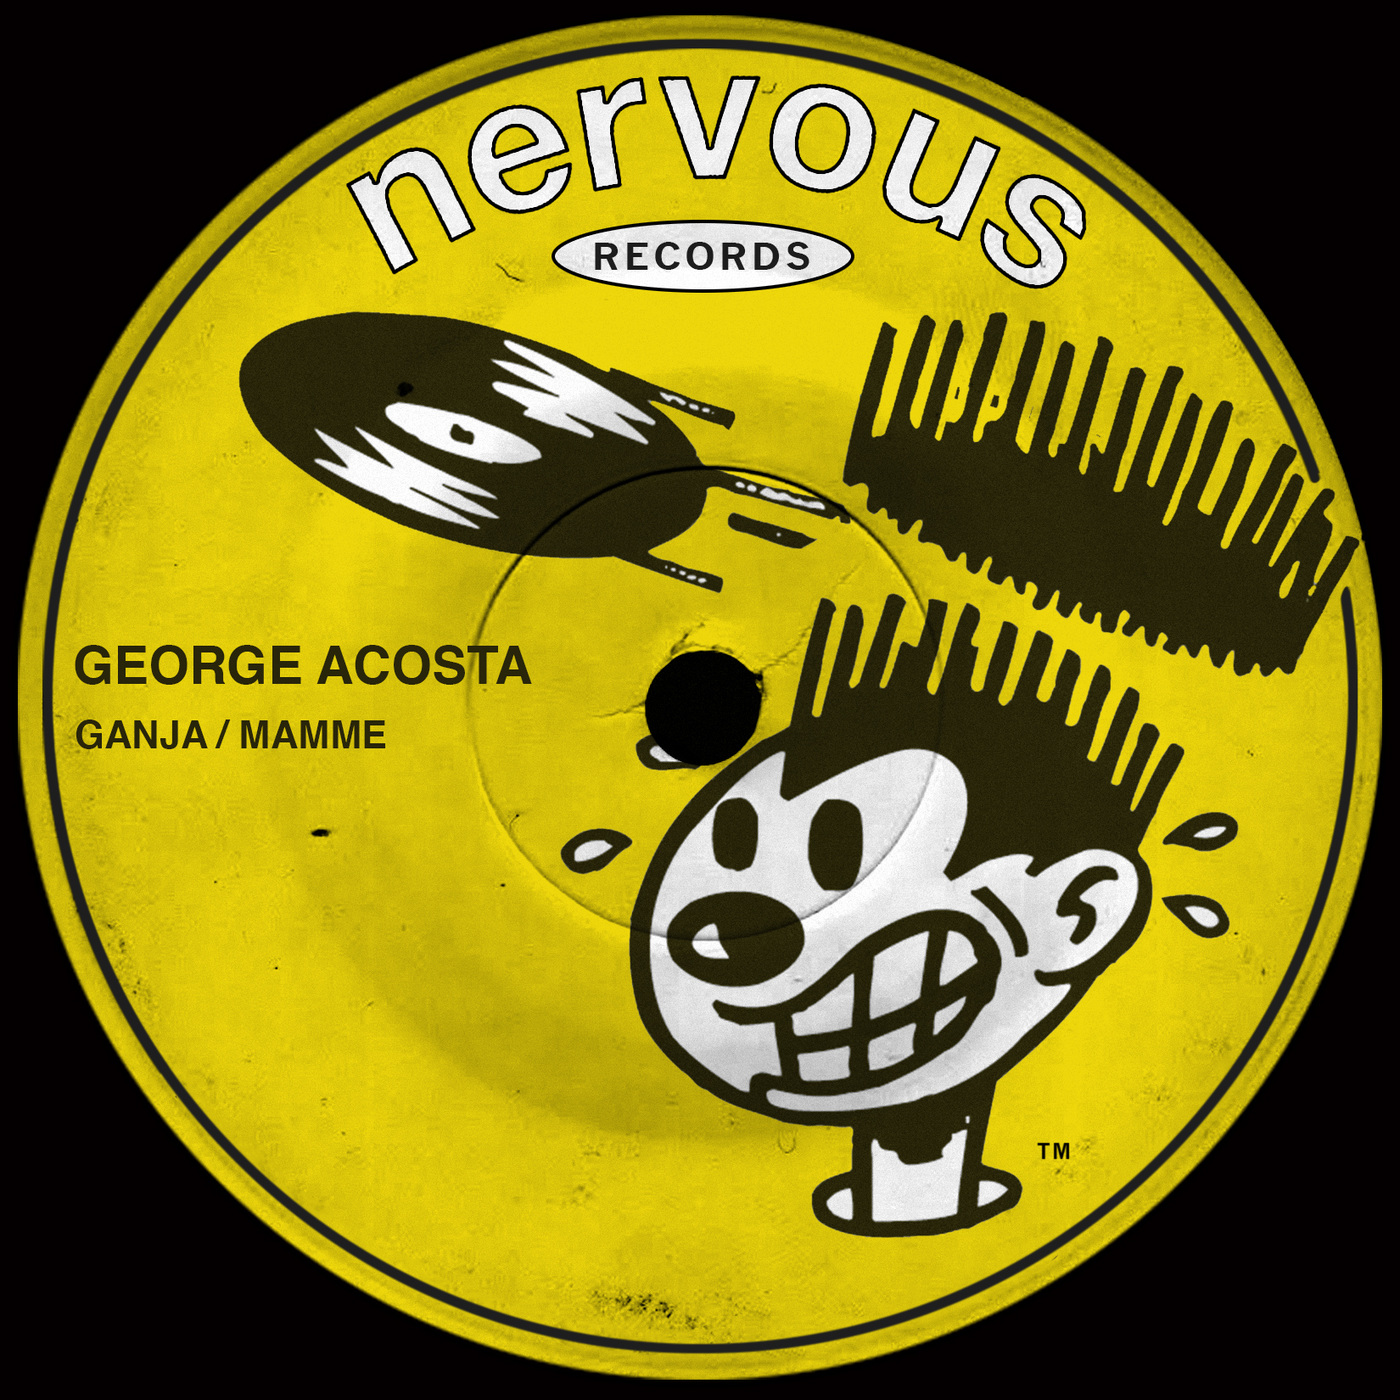 George Acosta - Ganja / Mamme / Nervous Records